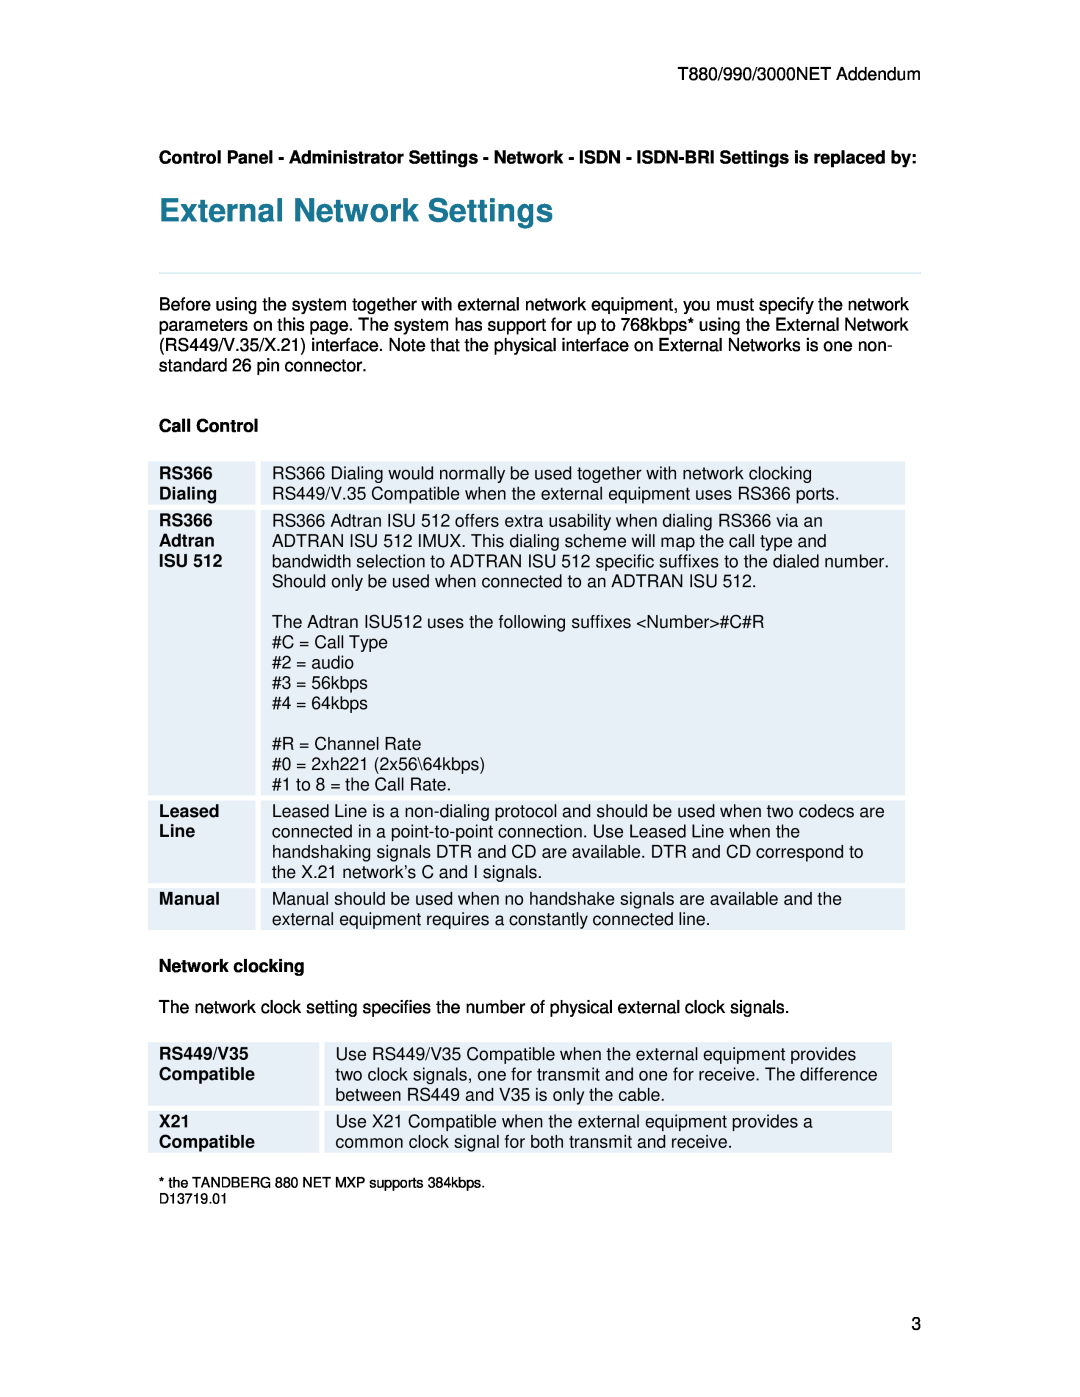 TANDBERG 3000, 990, 880 user manual External Network Settings 